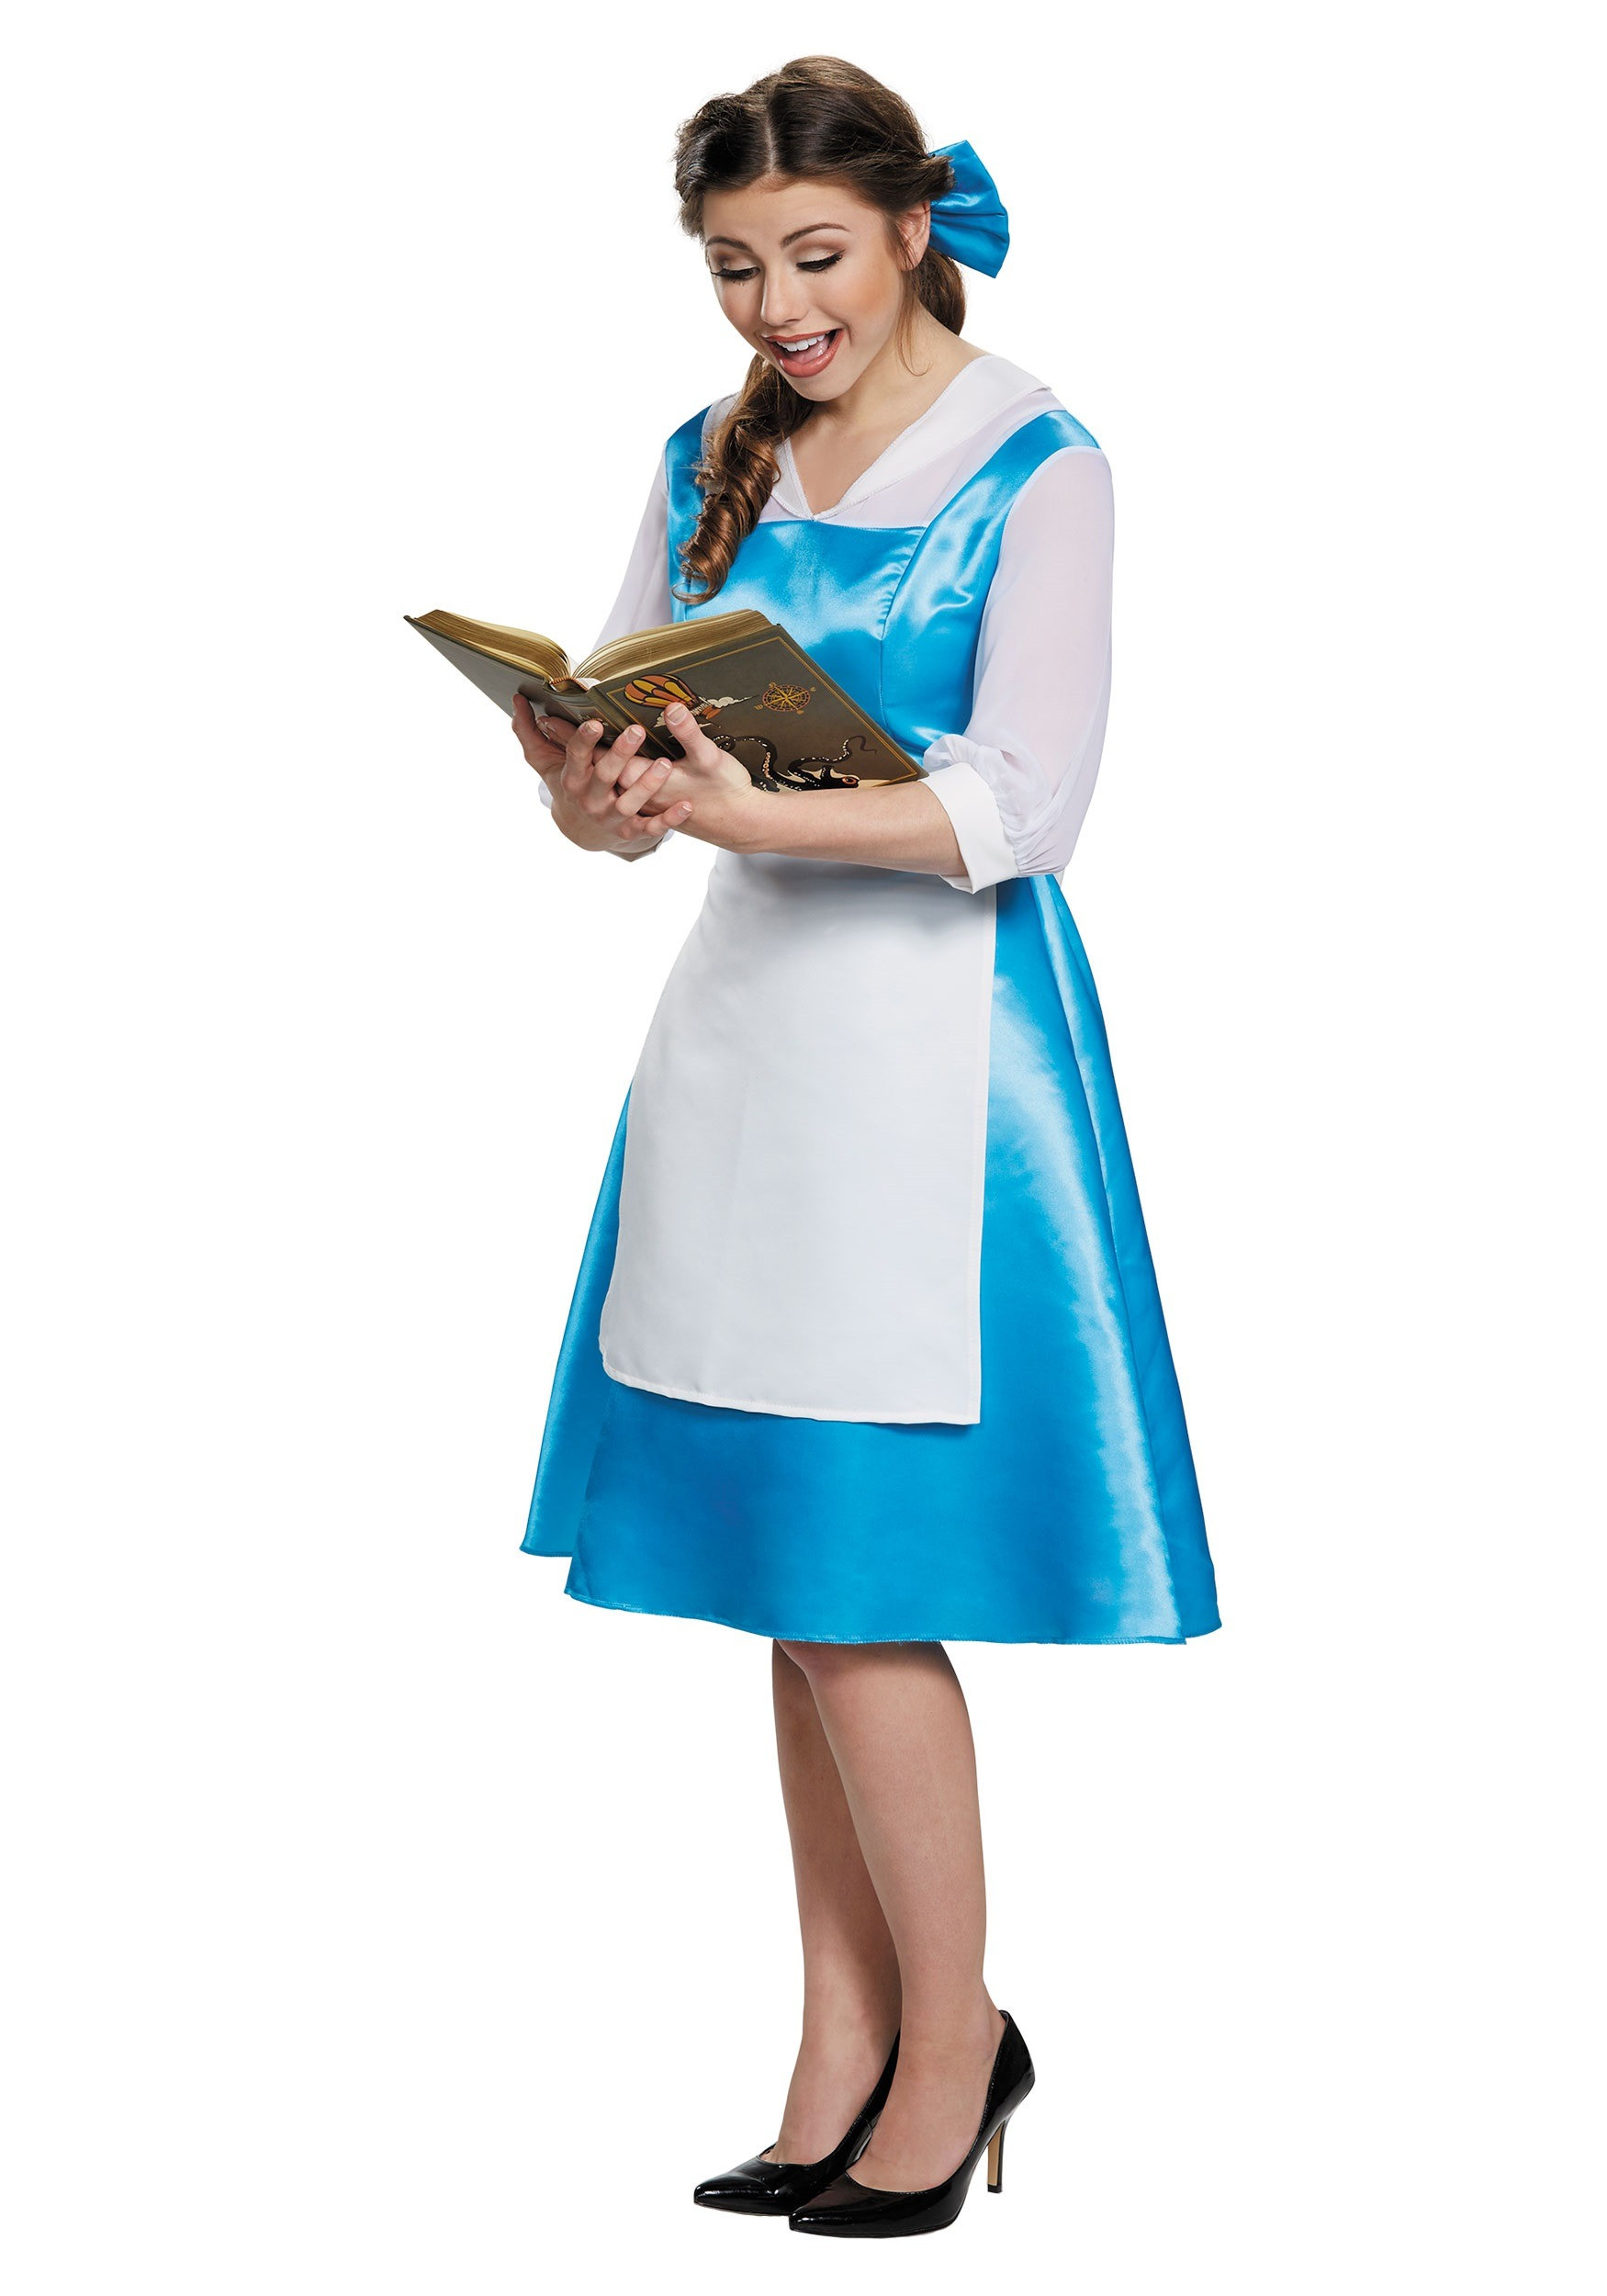 Best ideas about DIY Belle Costume Blue Dress
. Save or Pin Adult Belle Blue Costume Dress Now.